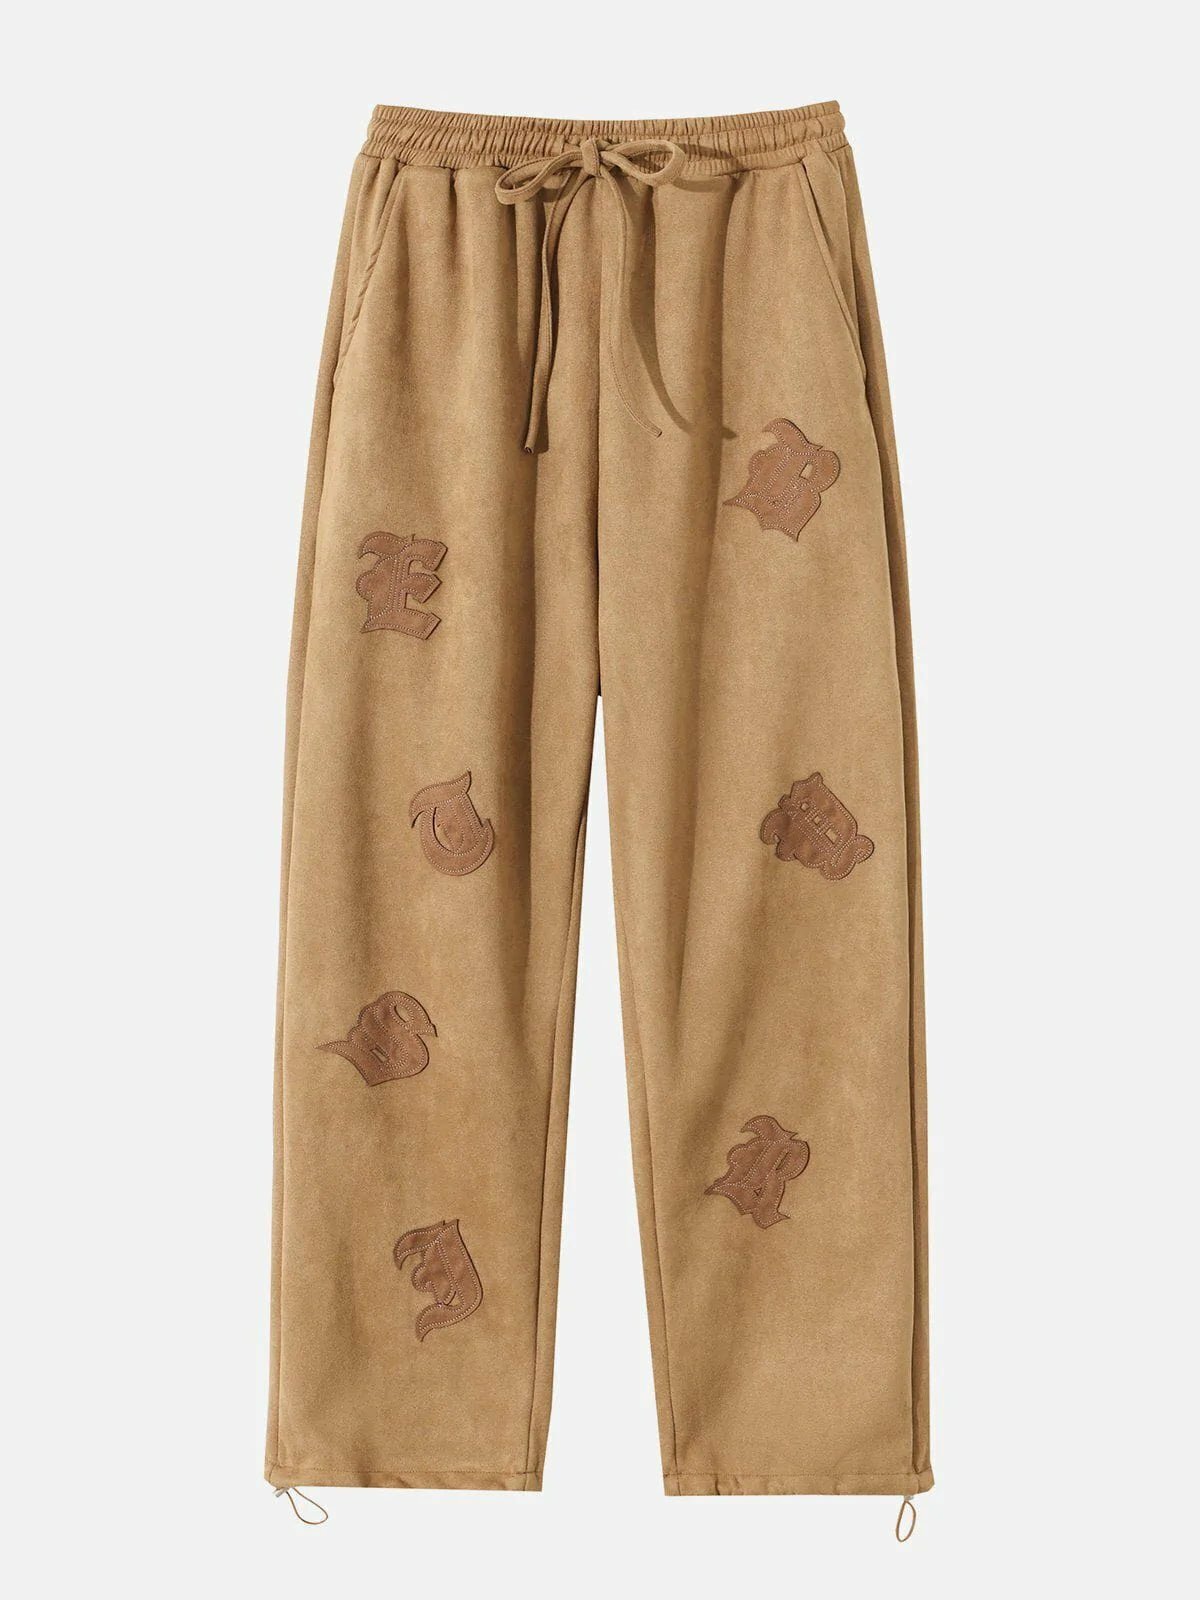 custom alphabet patch sweatpants edgy & youthful streetwear 8708